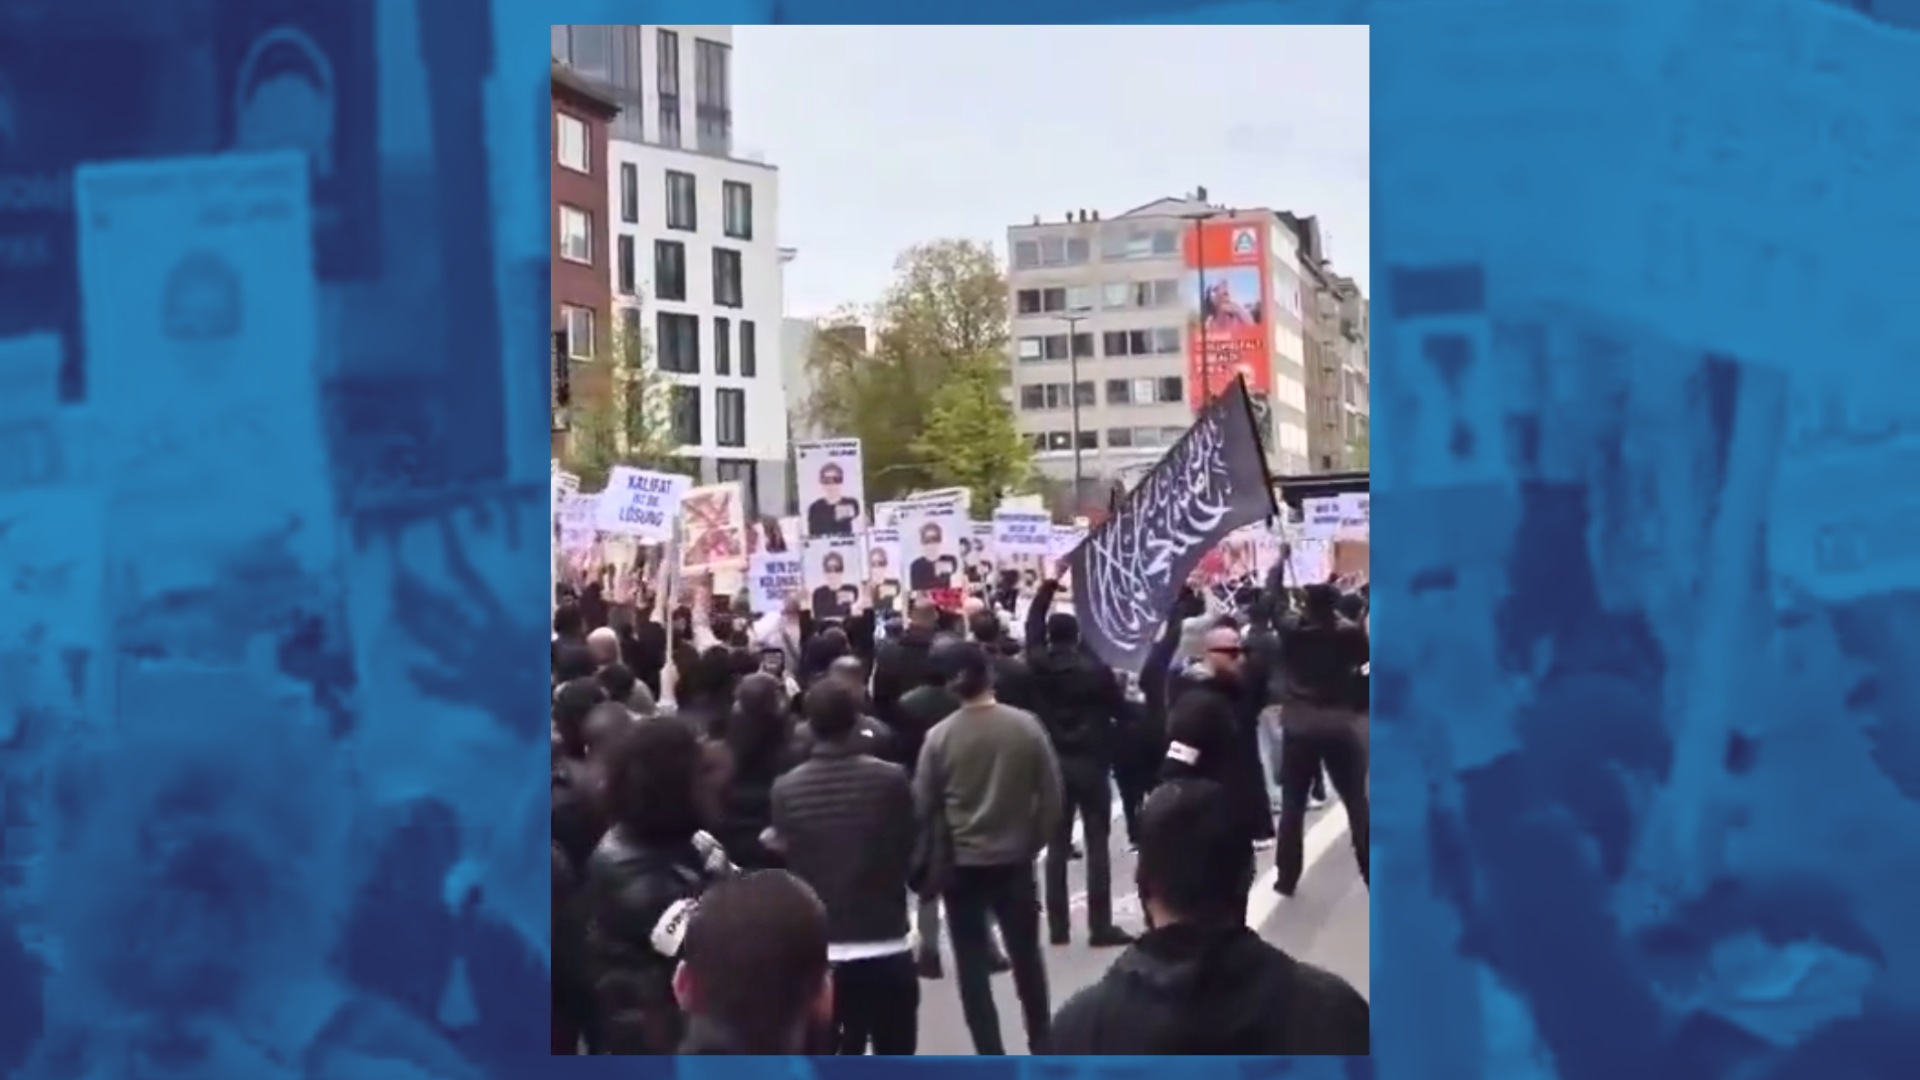 Germania, la marcia degli islamisti al grido “califfato”